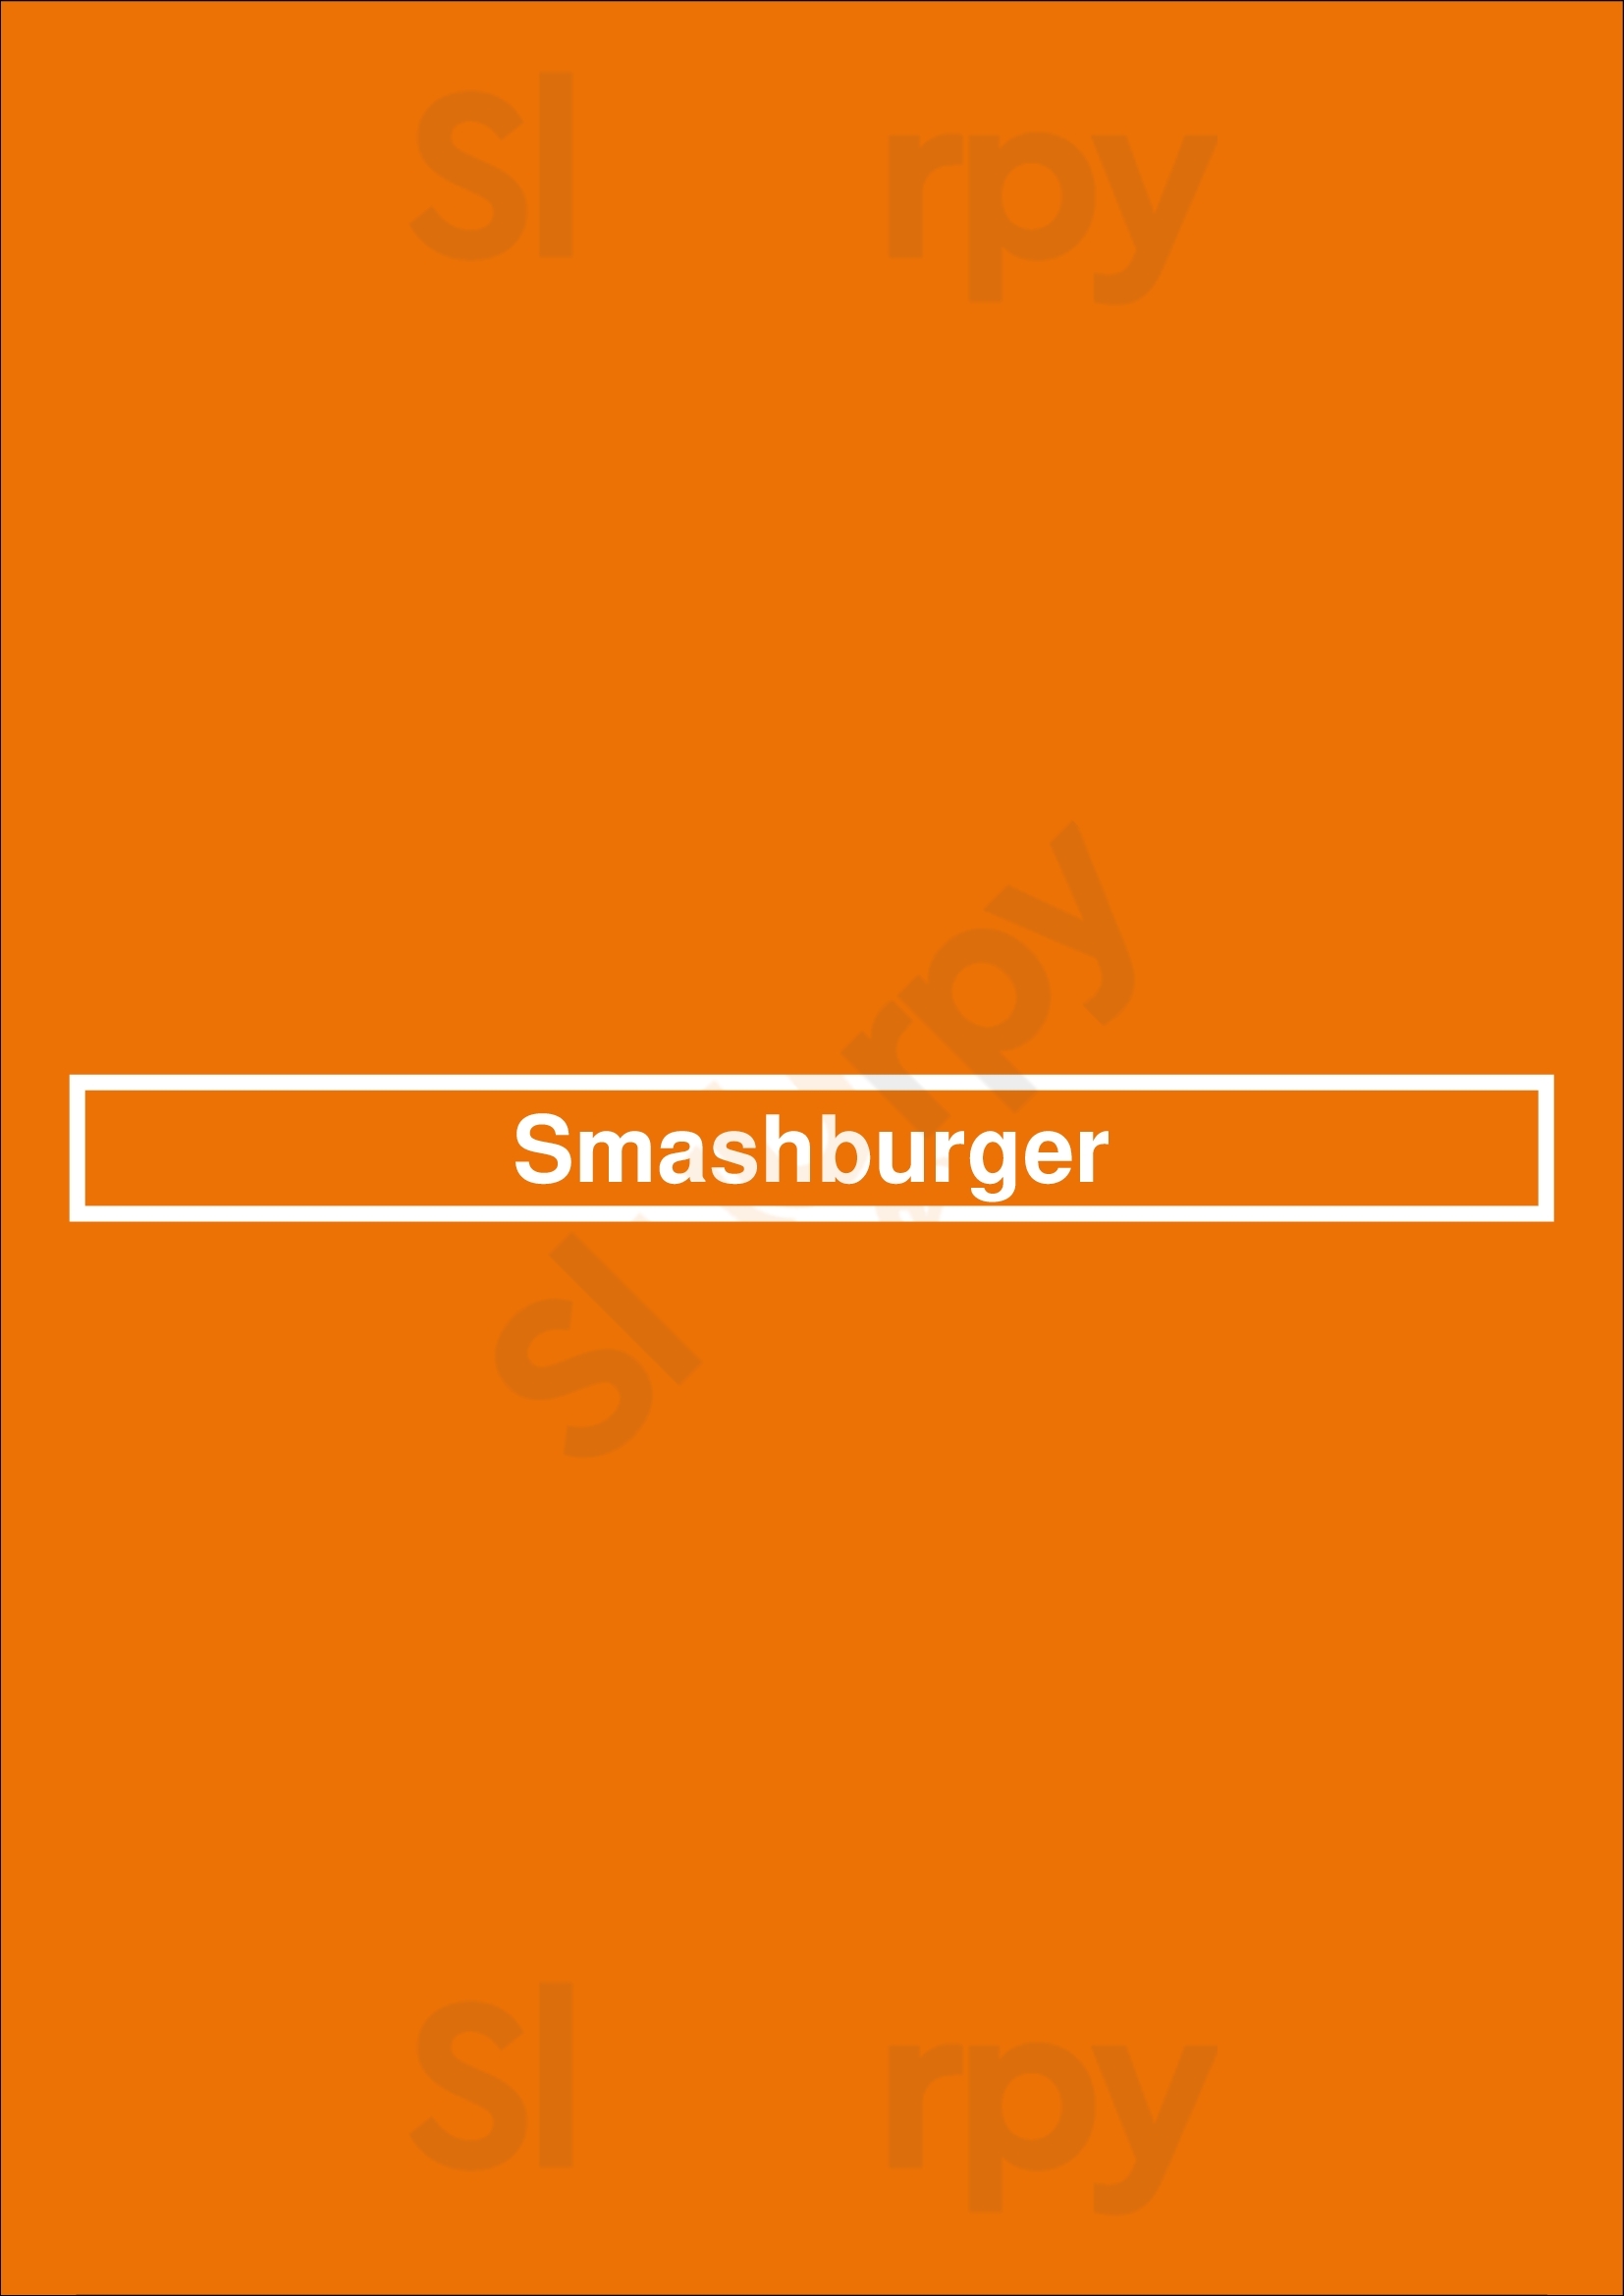 Smashburger Sherwood Park Menu - 1